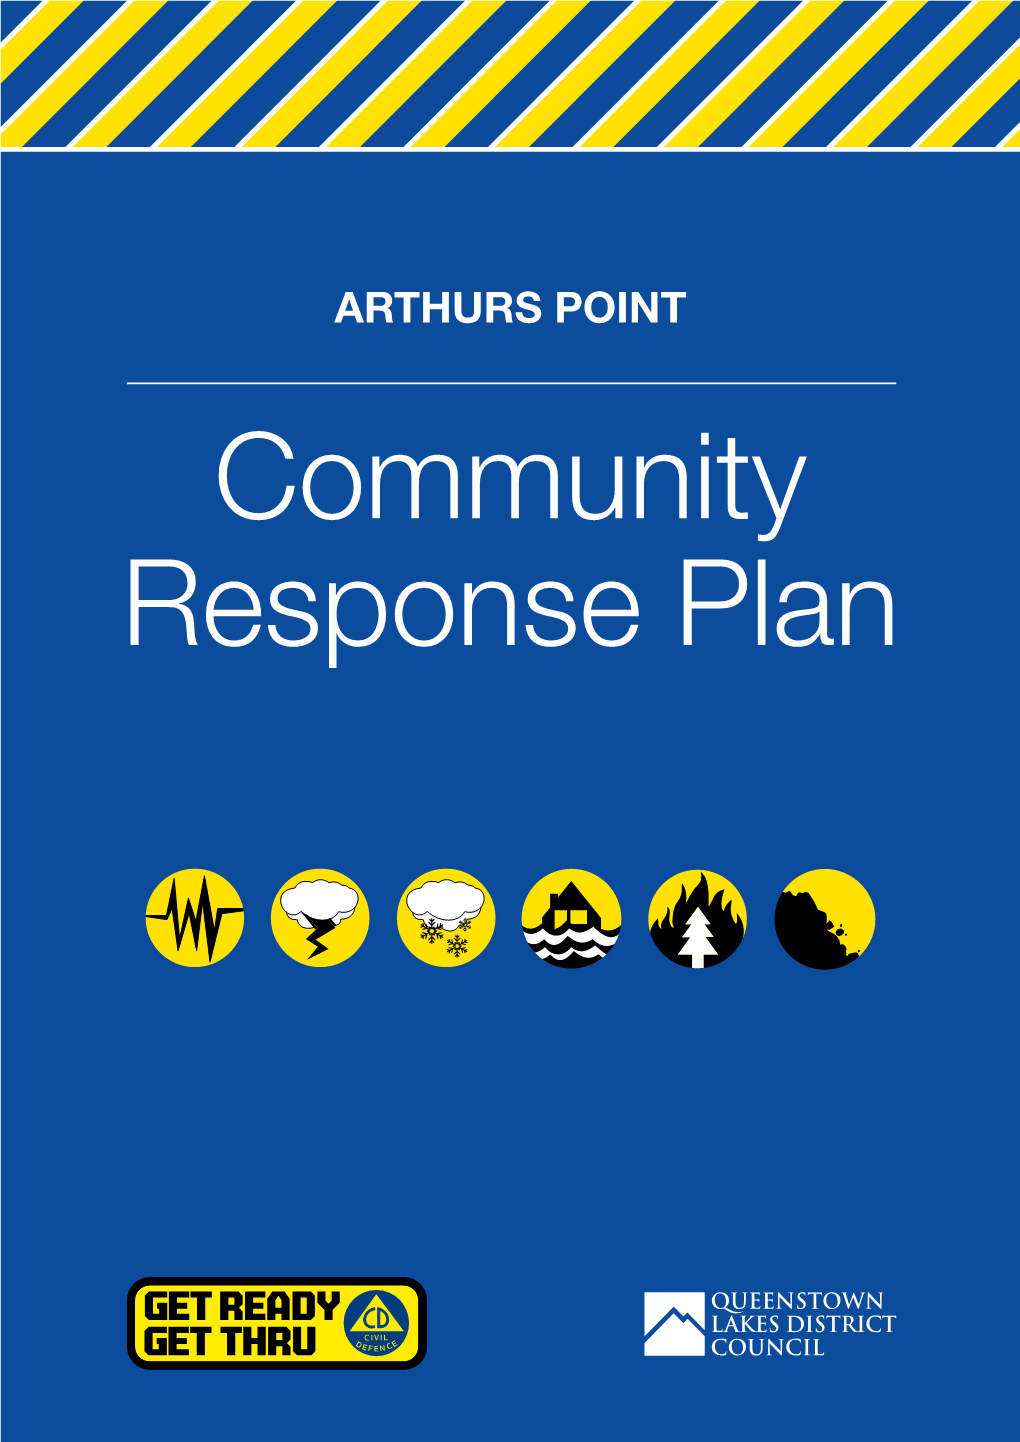 ARTHURS POINT Community Response Plan Contents